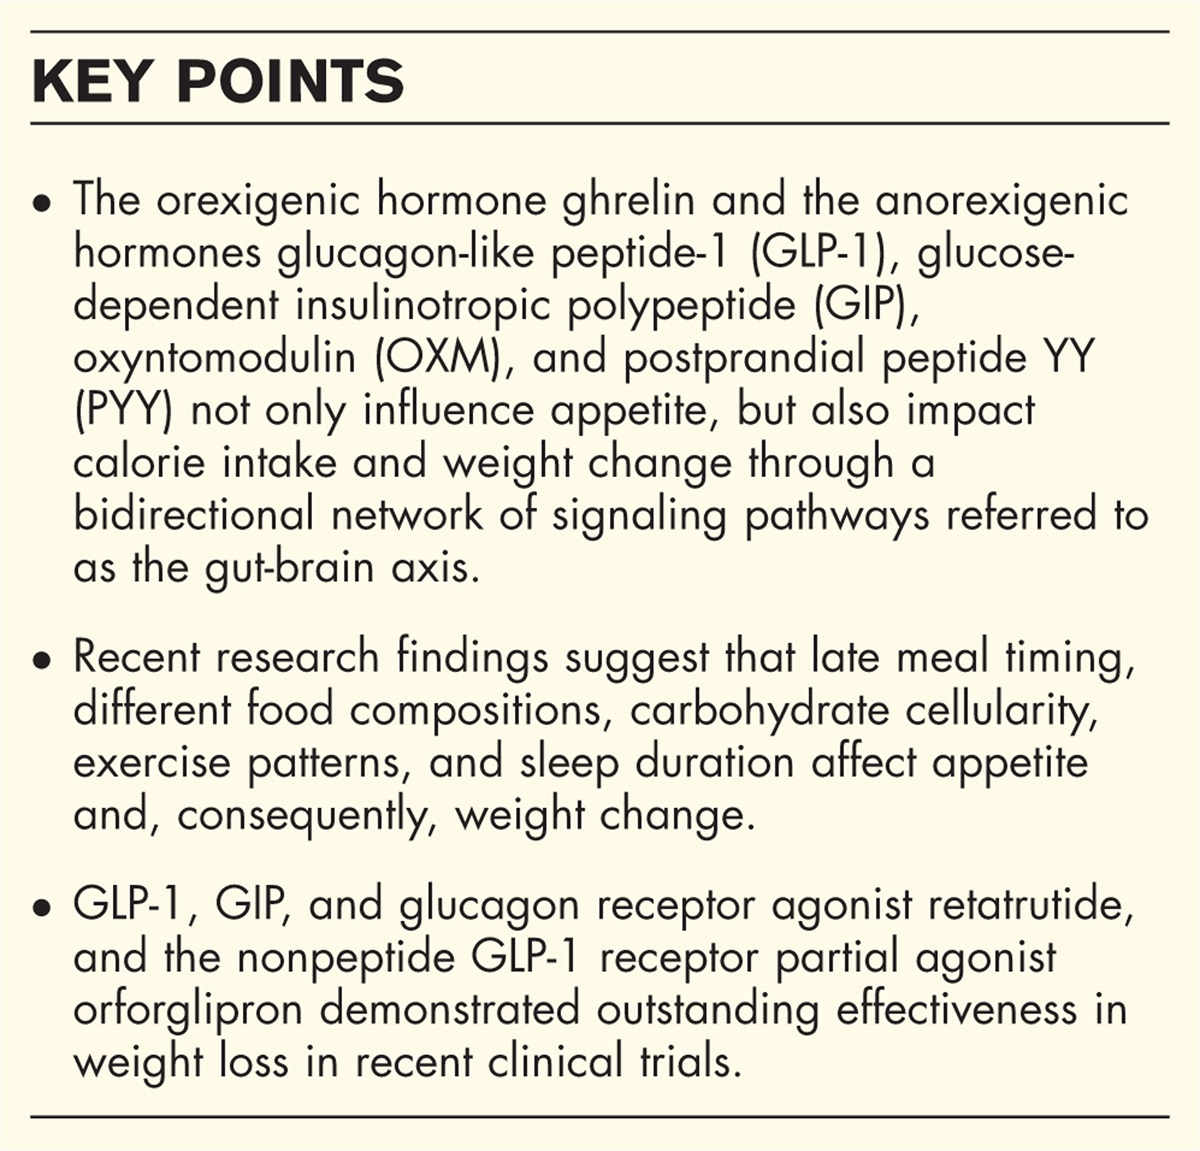 Gut hormones and appetite regulation